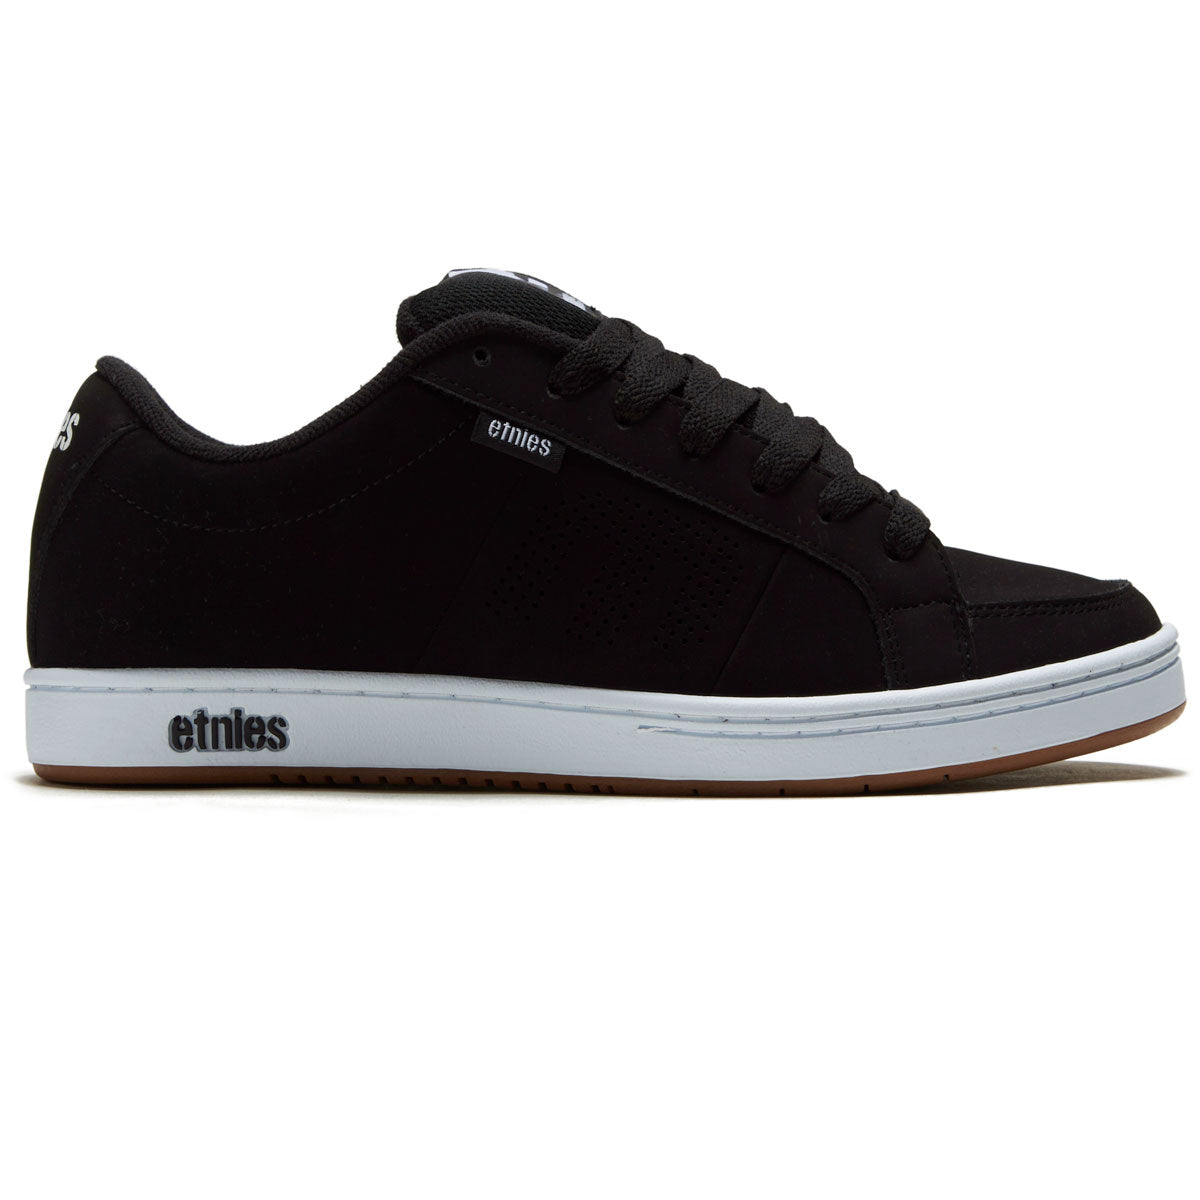 Etnies Kingpin Shoes - Black/White/Gum image 1